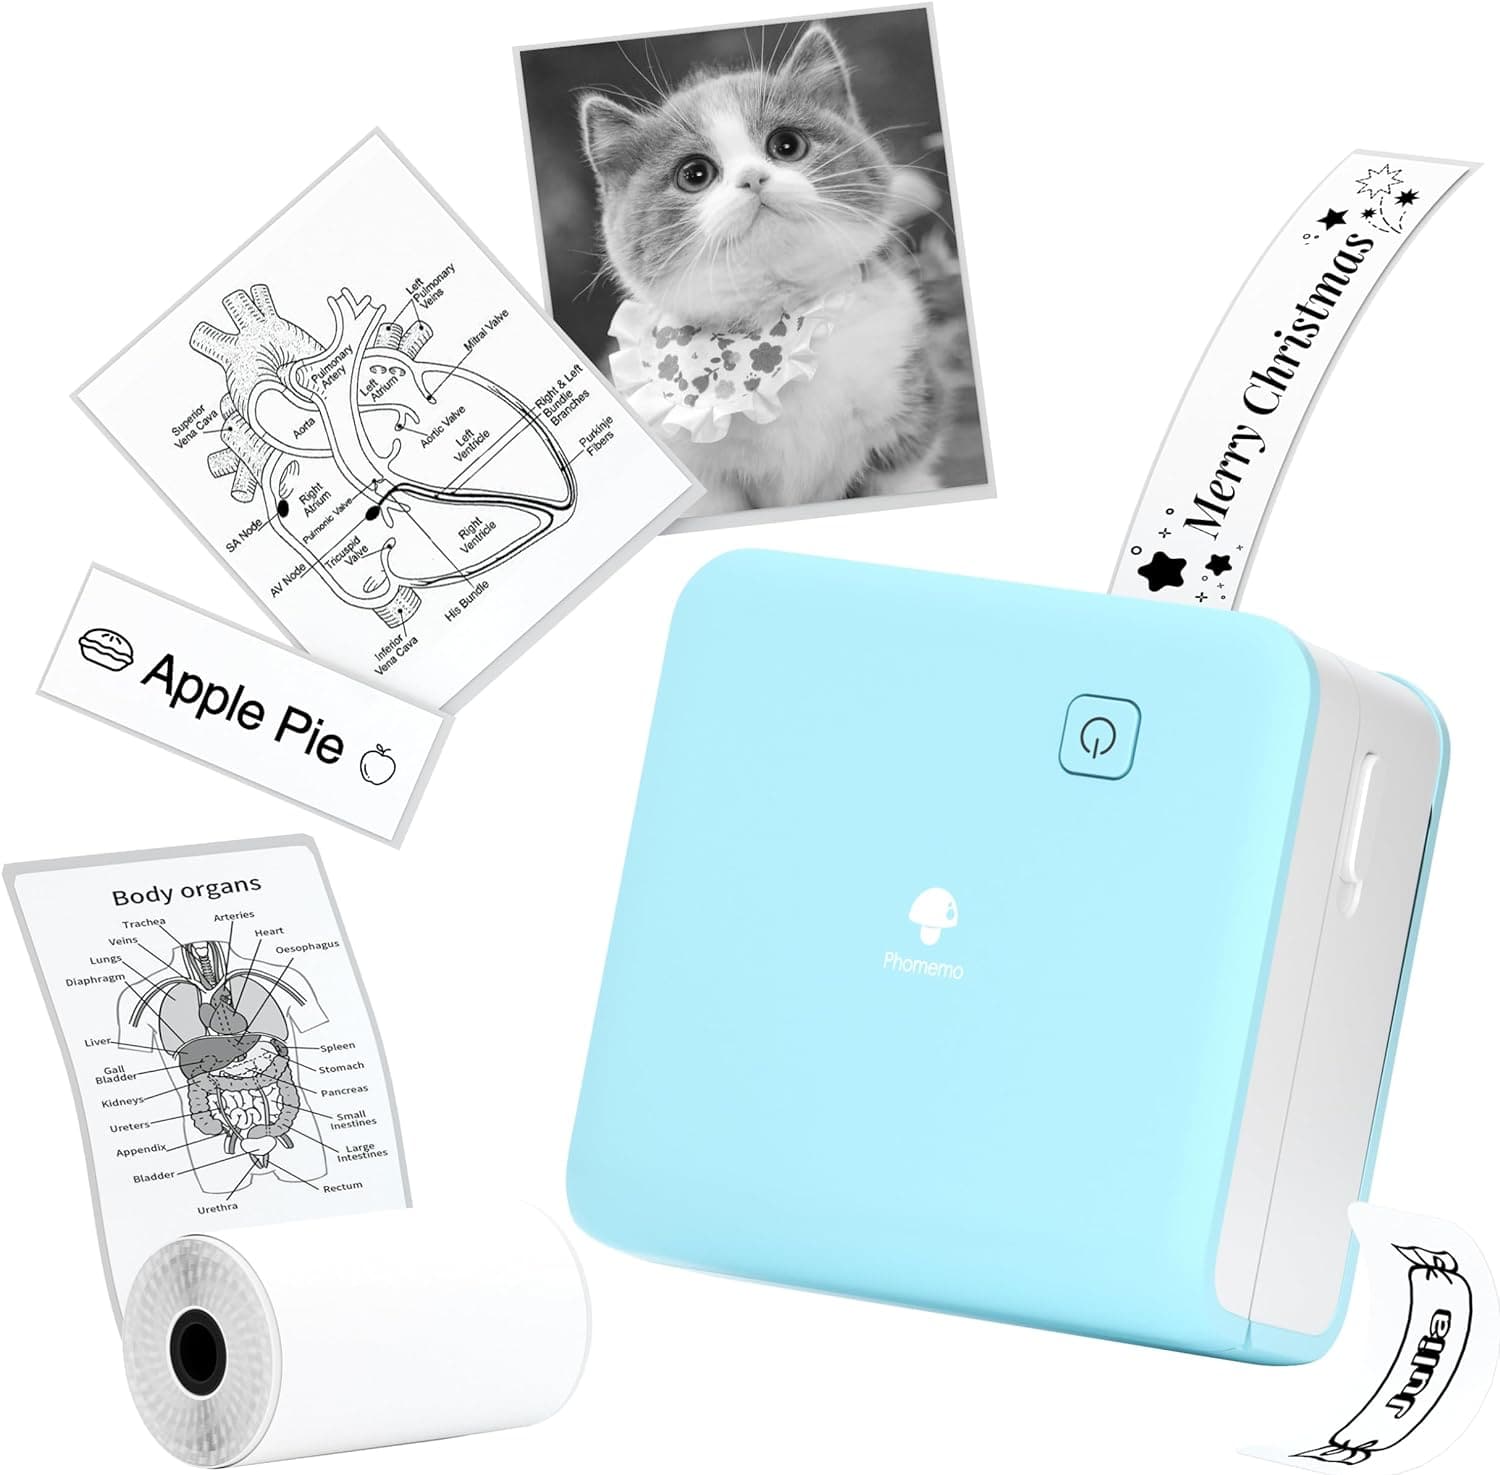 Phomemo 300dpi Photo Pocket Thermal Printer M02 Pro Mini Wireless Machine  for Plan Journal, Organization, Art Creation, Gift